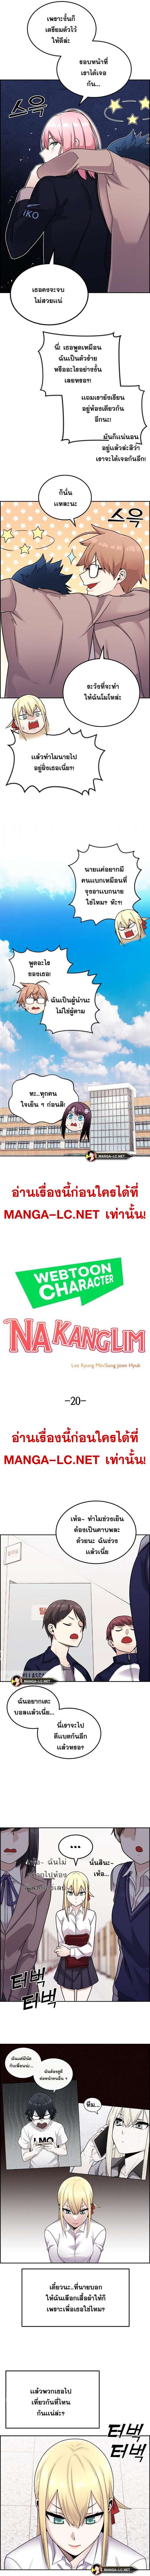 Webtoon Character Na Kang Lim ร ยธโ€ขร ยธยญร ยธโขร ยธโ€”ร ยธยตร ยนห 20 (3)